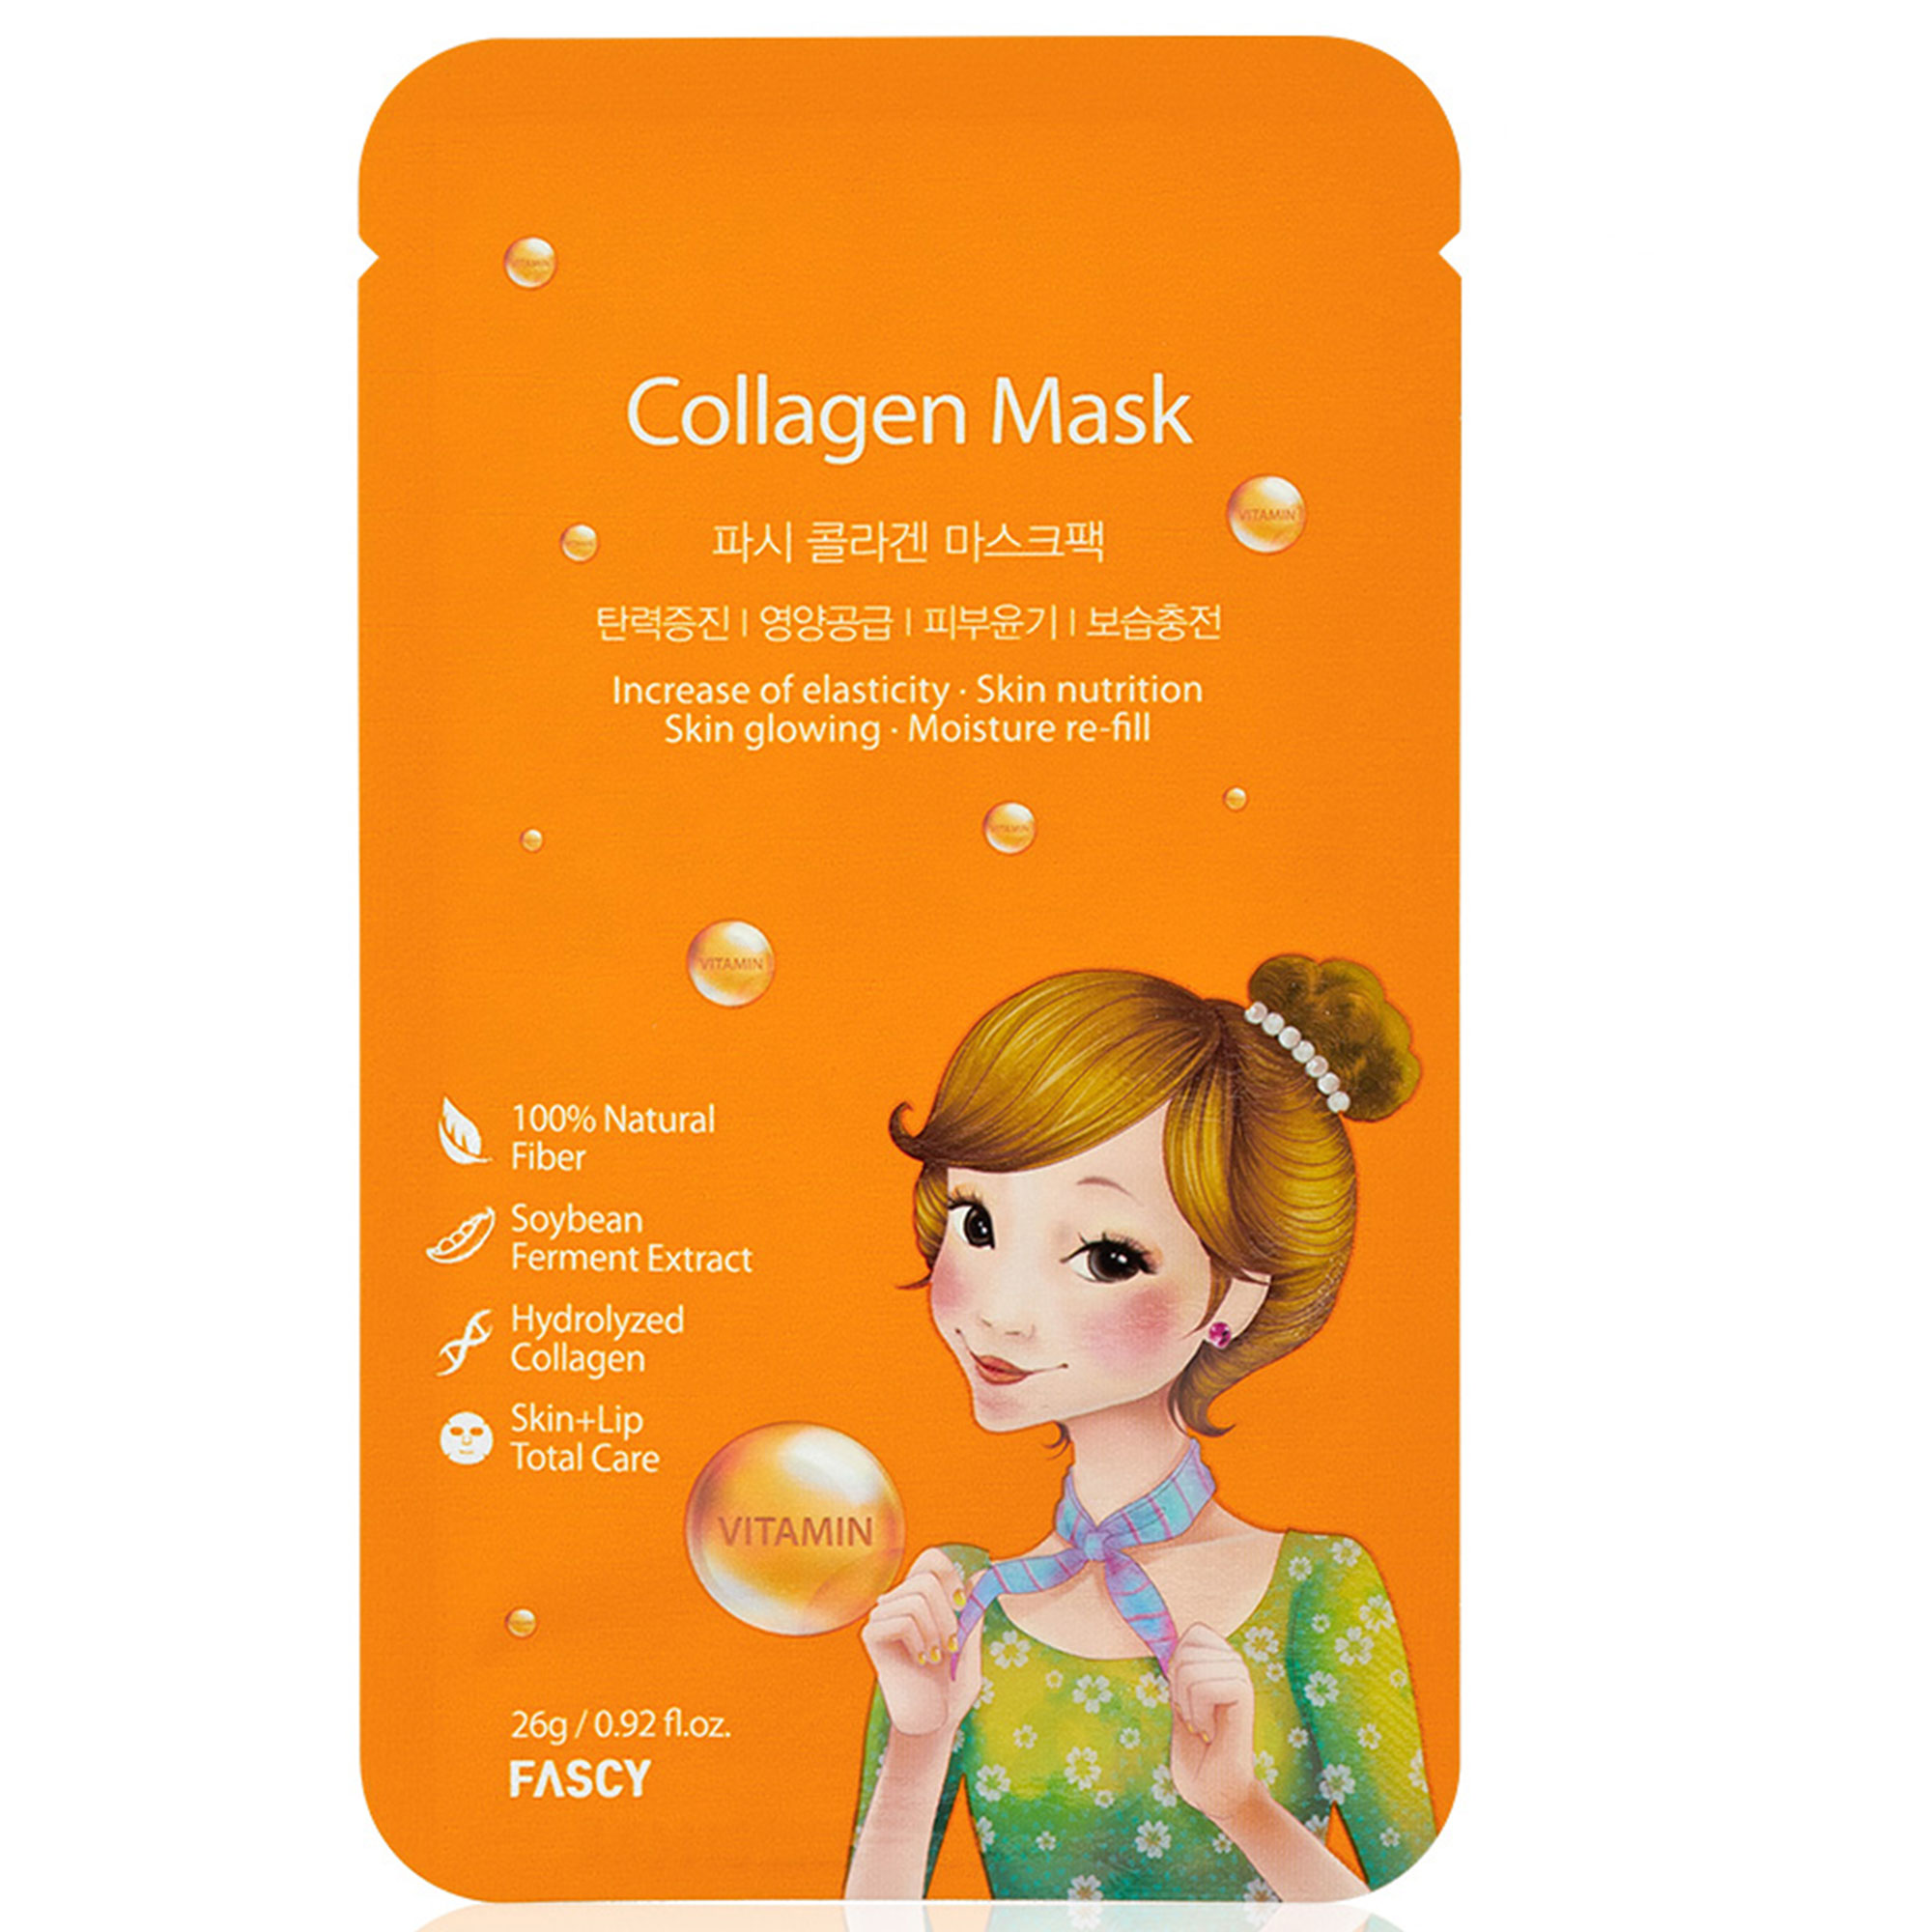 korean mask image, orange mask